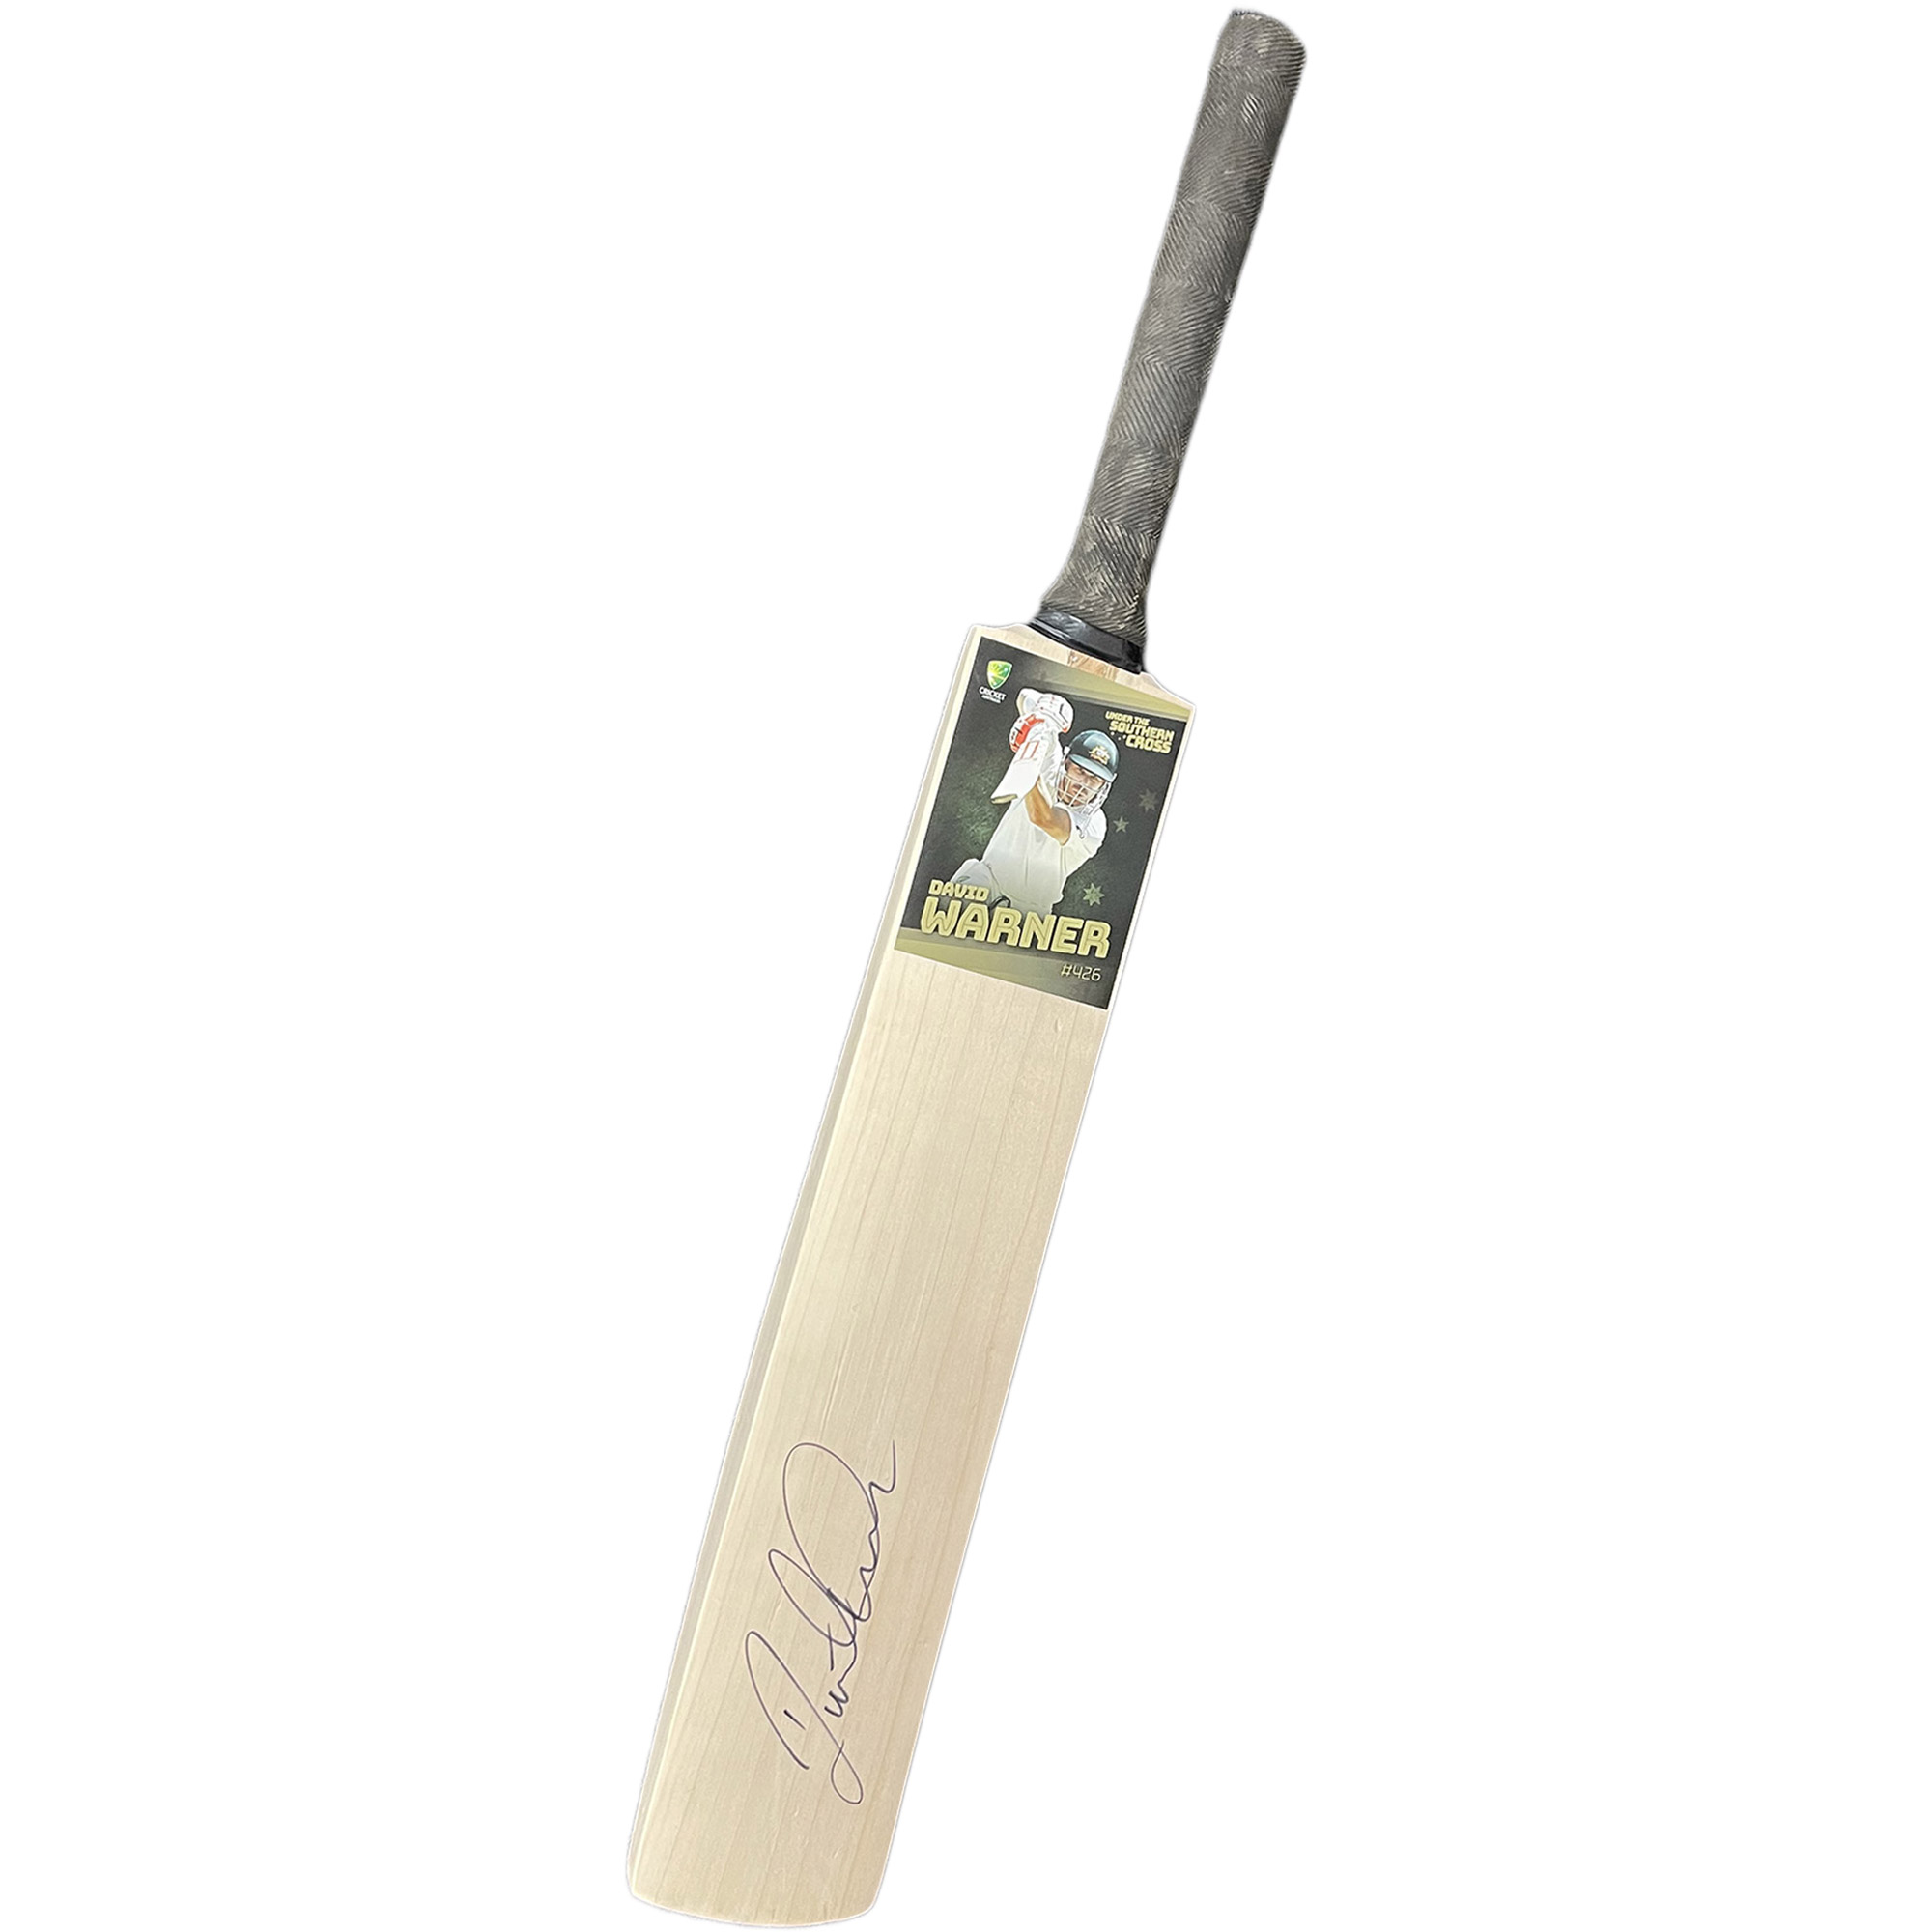 Cricket – David Warner Signed Cricket Bat